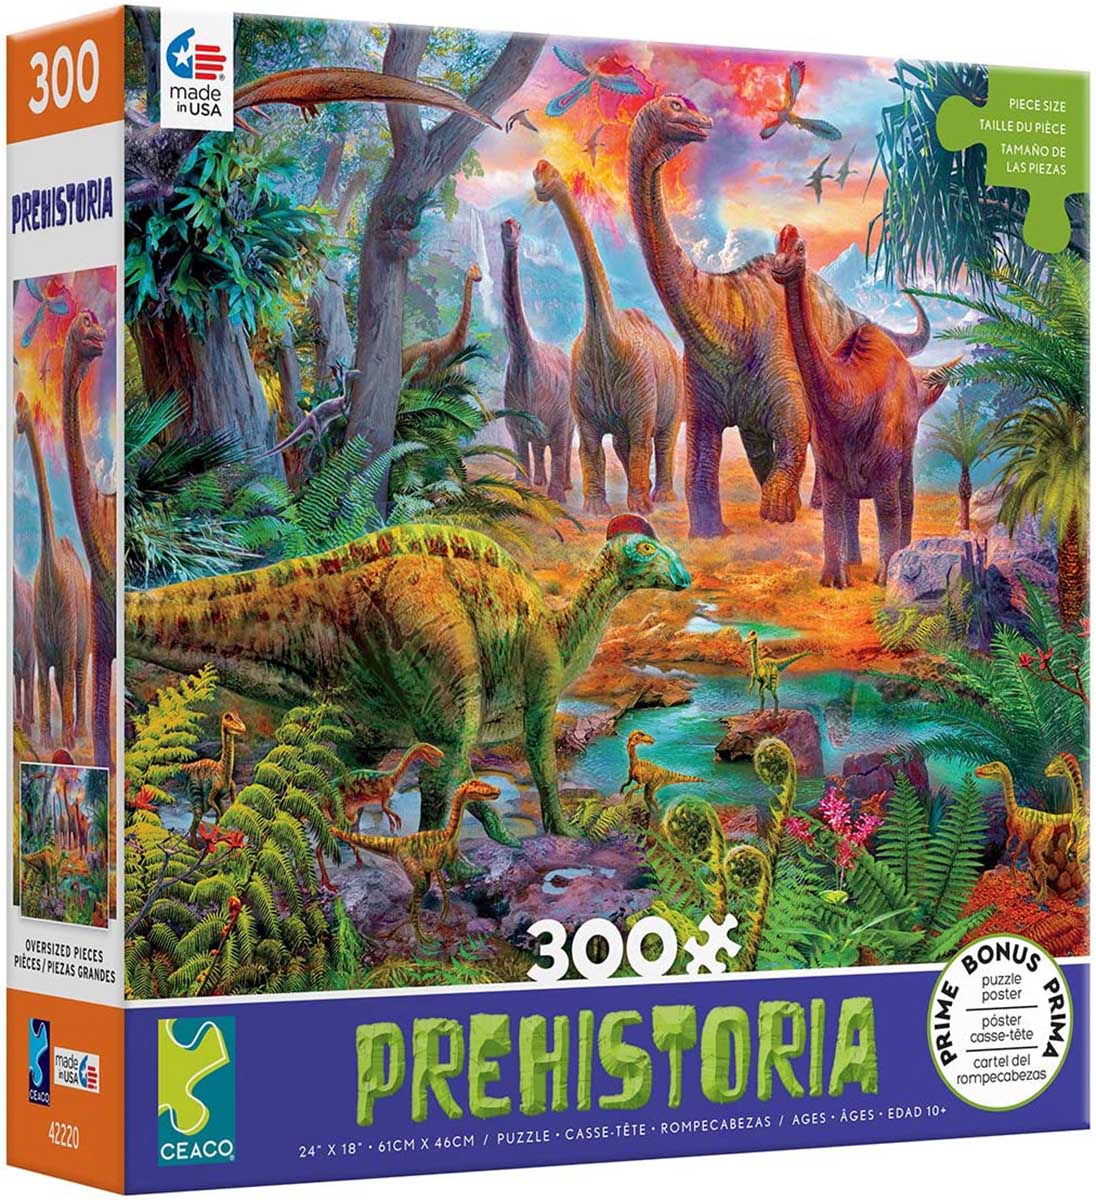 Dinosaur Jungle